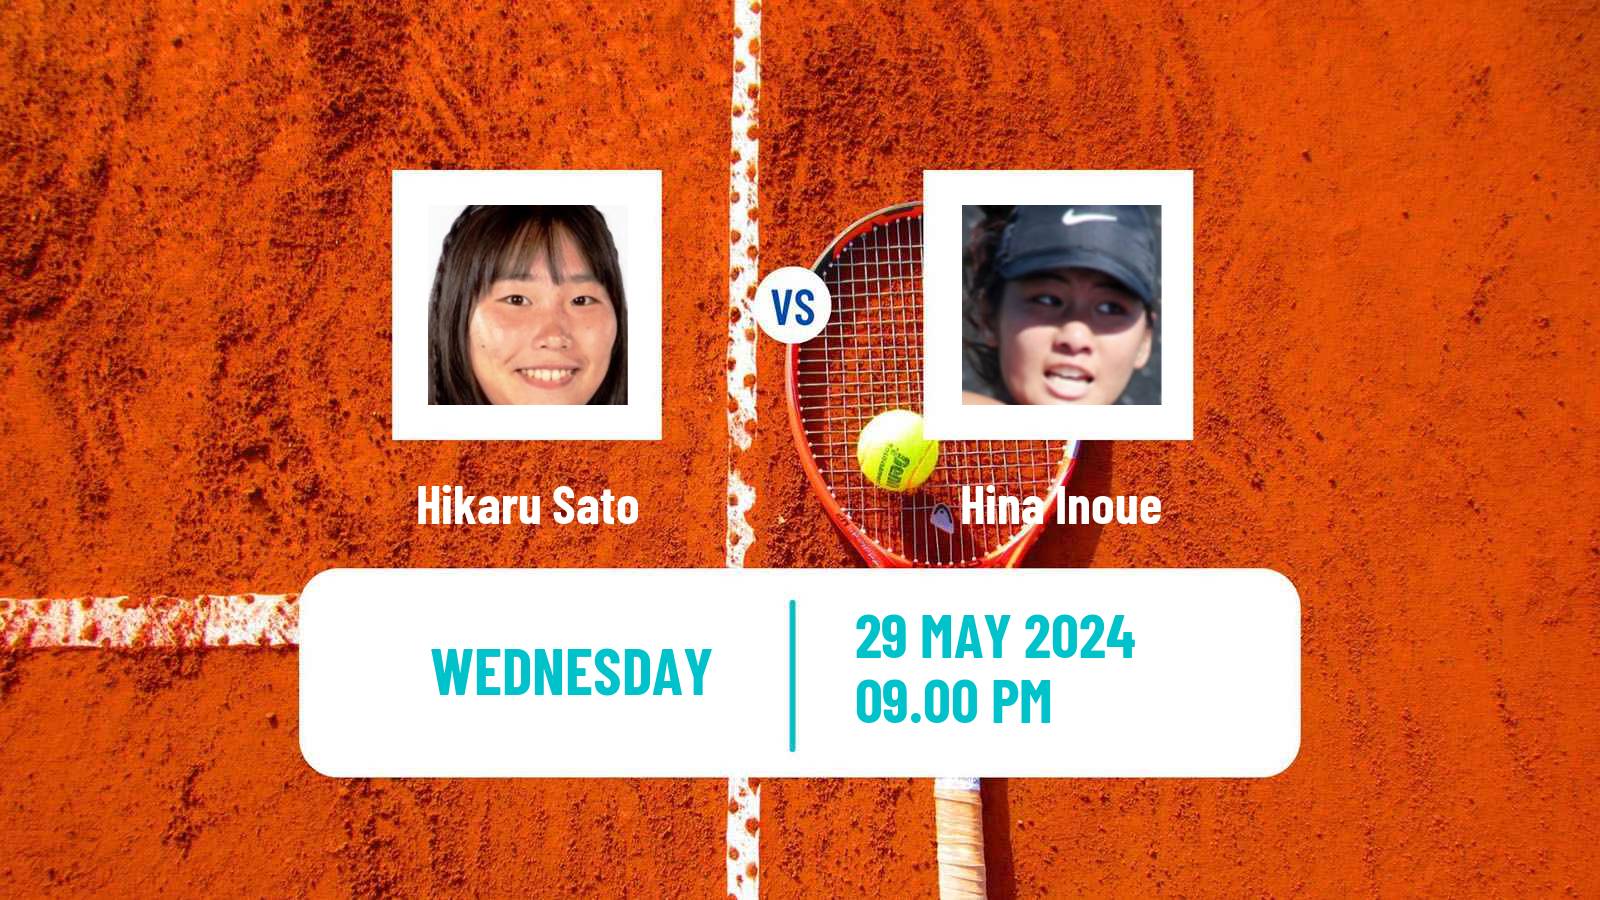 Tennis ITF W35 Changwon Women Hikaru Sato - Hina Inoue